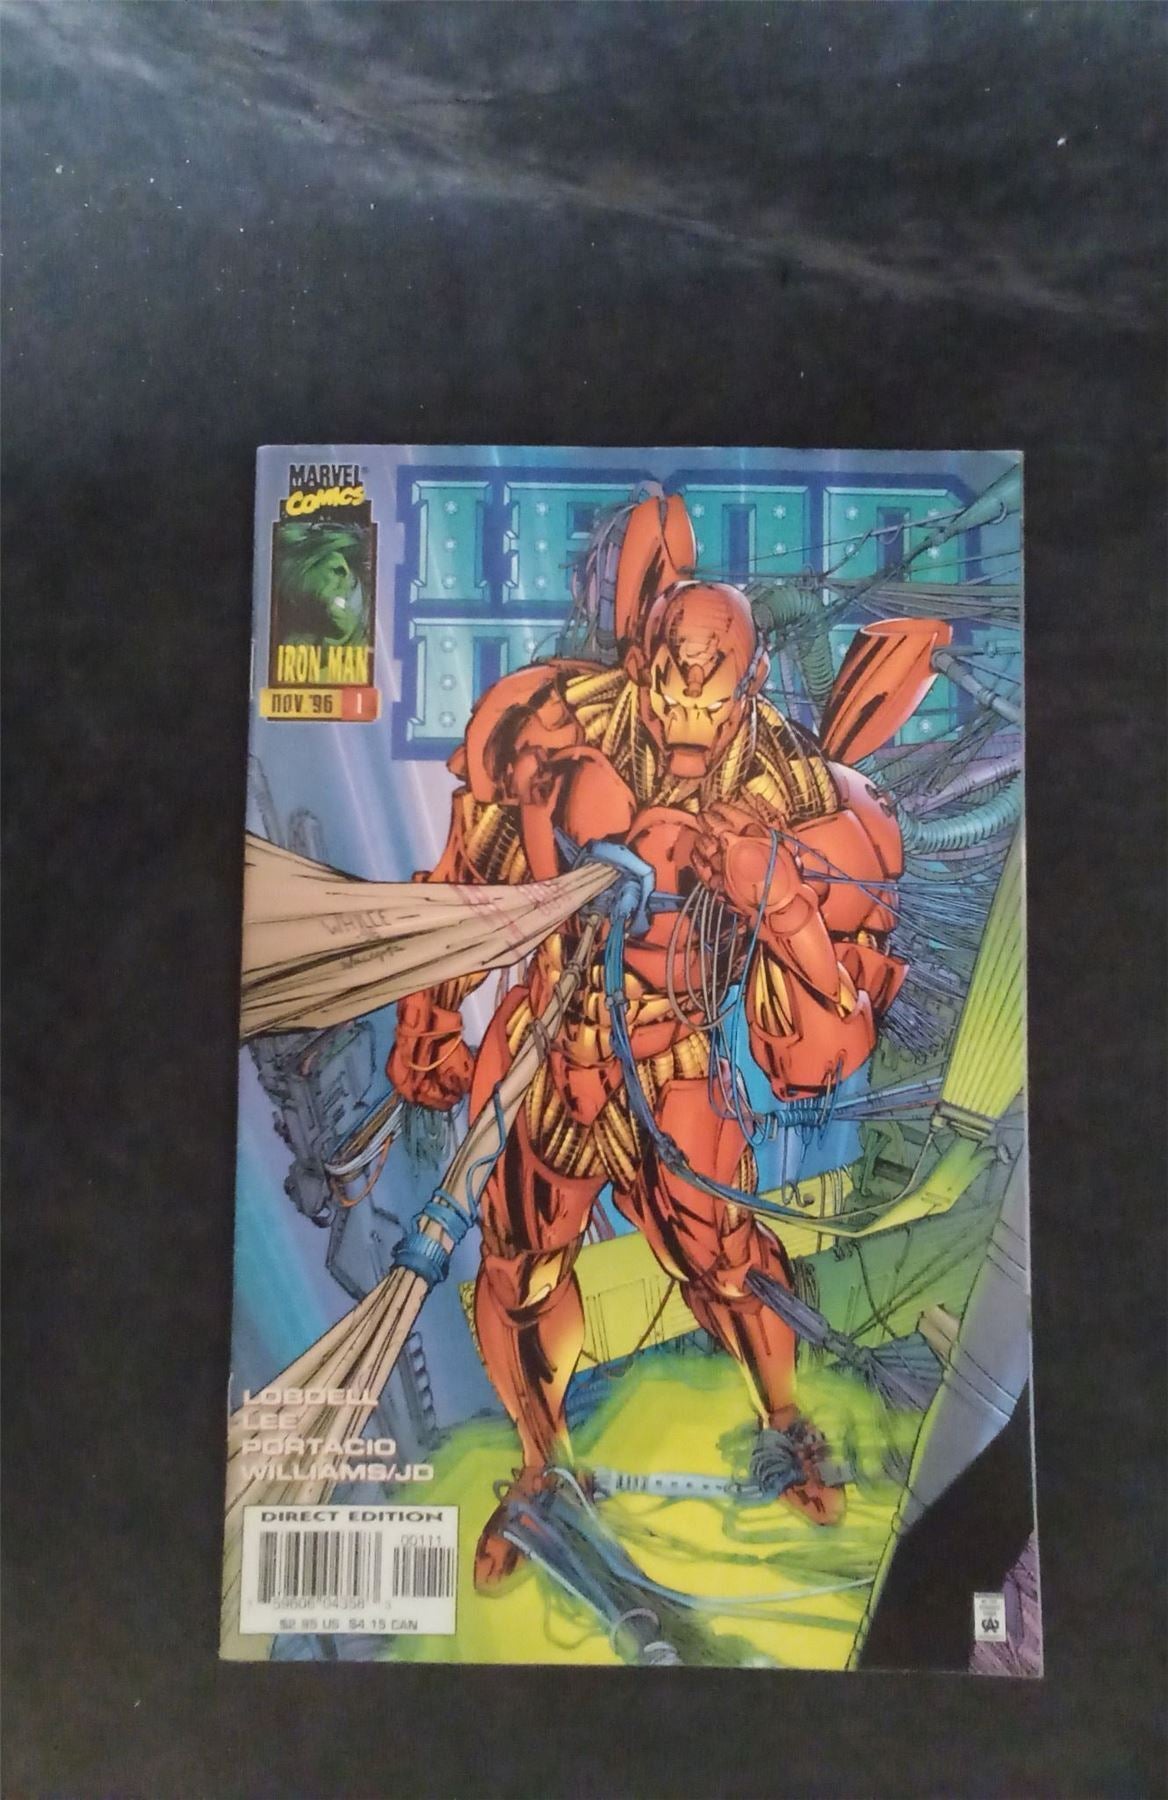 Iron Man #1 1996 marvel Comic Book marvel Comic Book